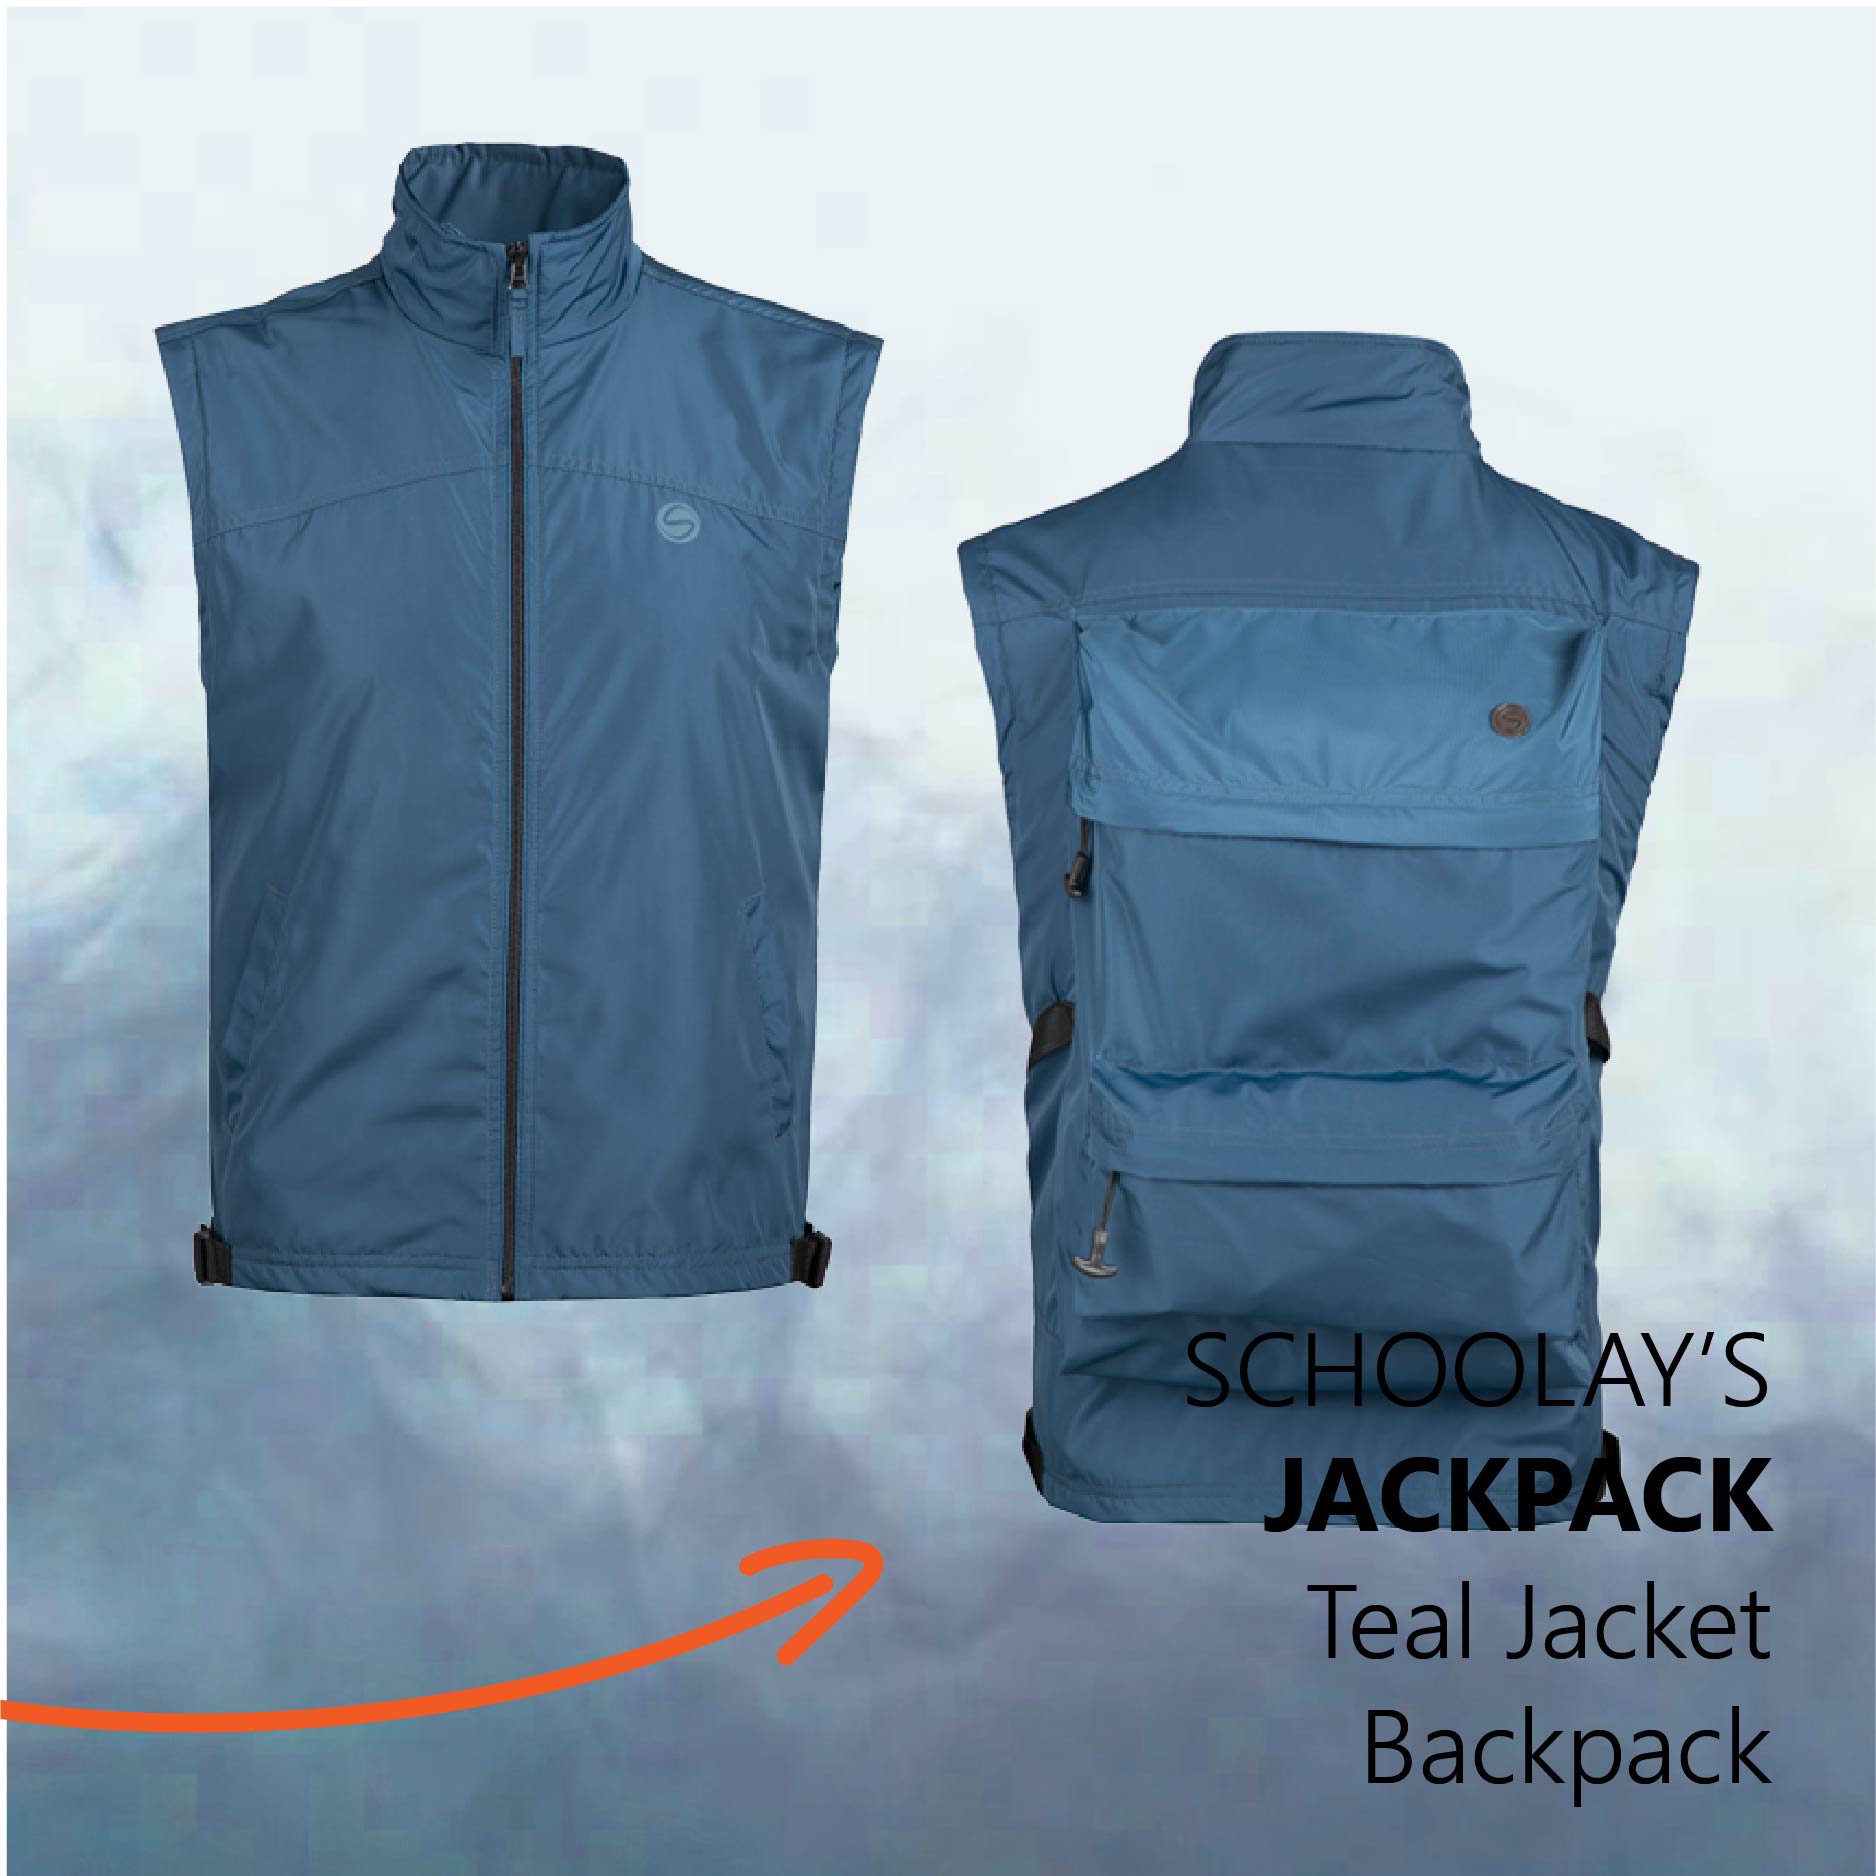 Teal JackPack (Jacket + Backpack) Core Functionality